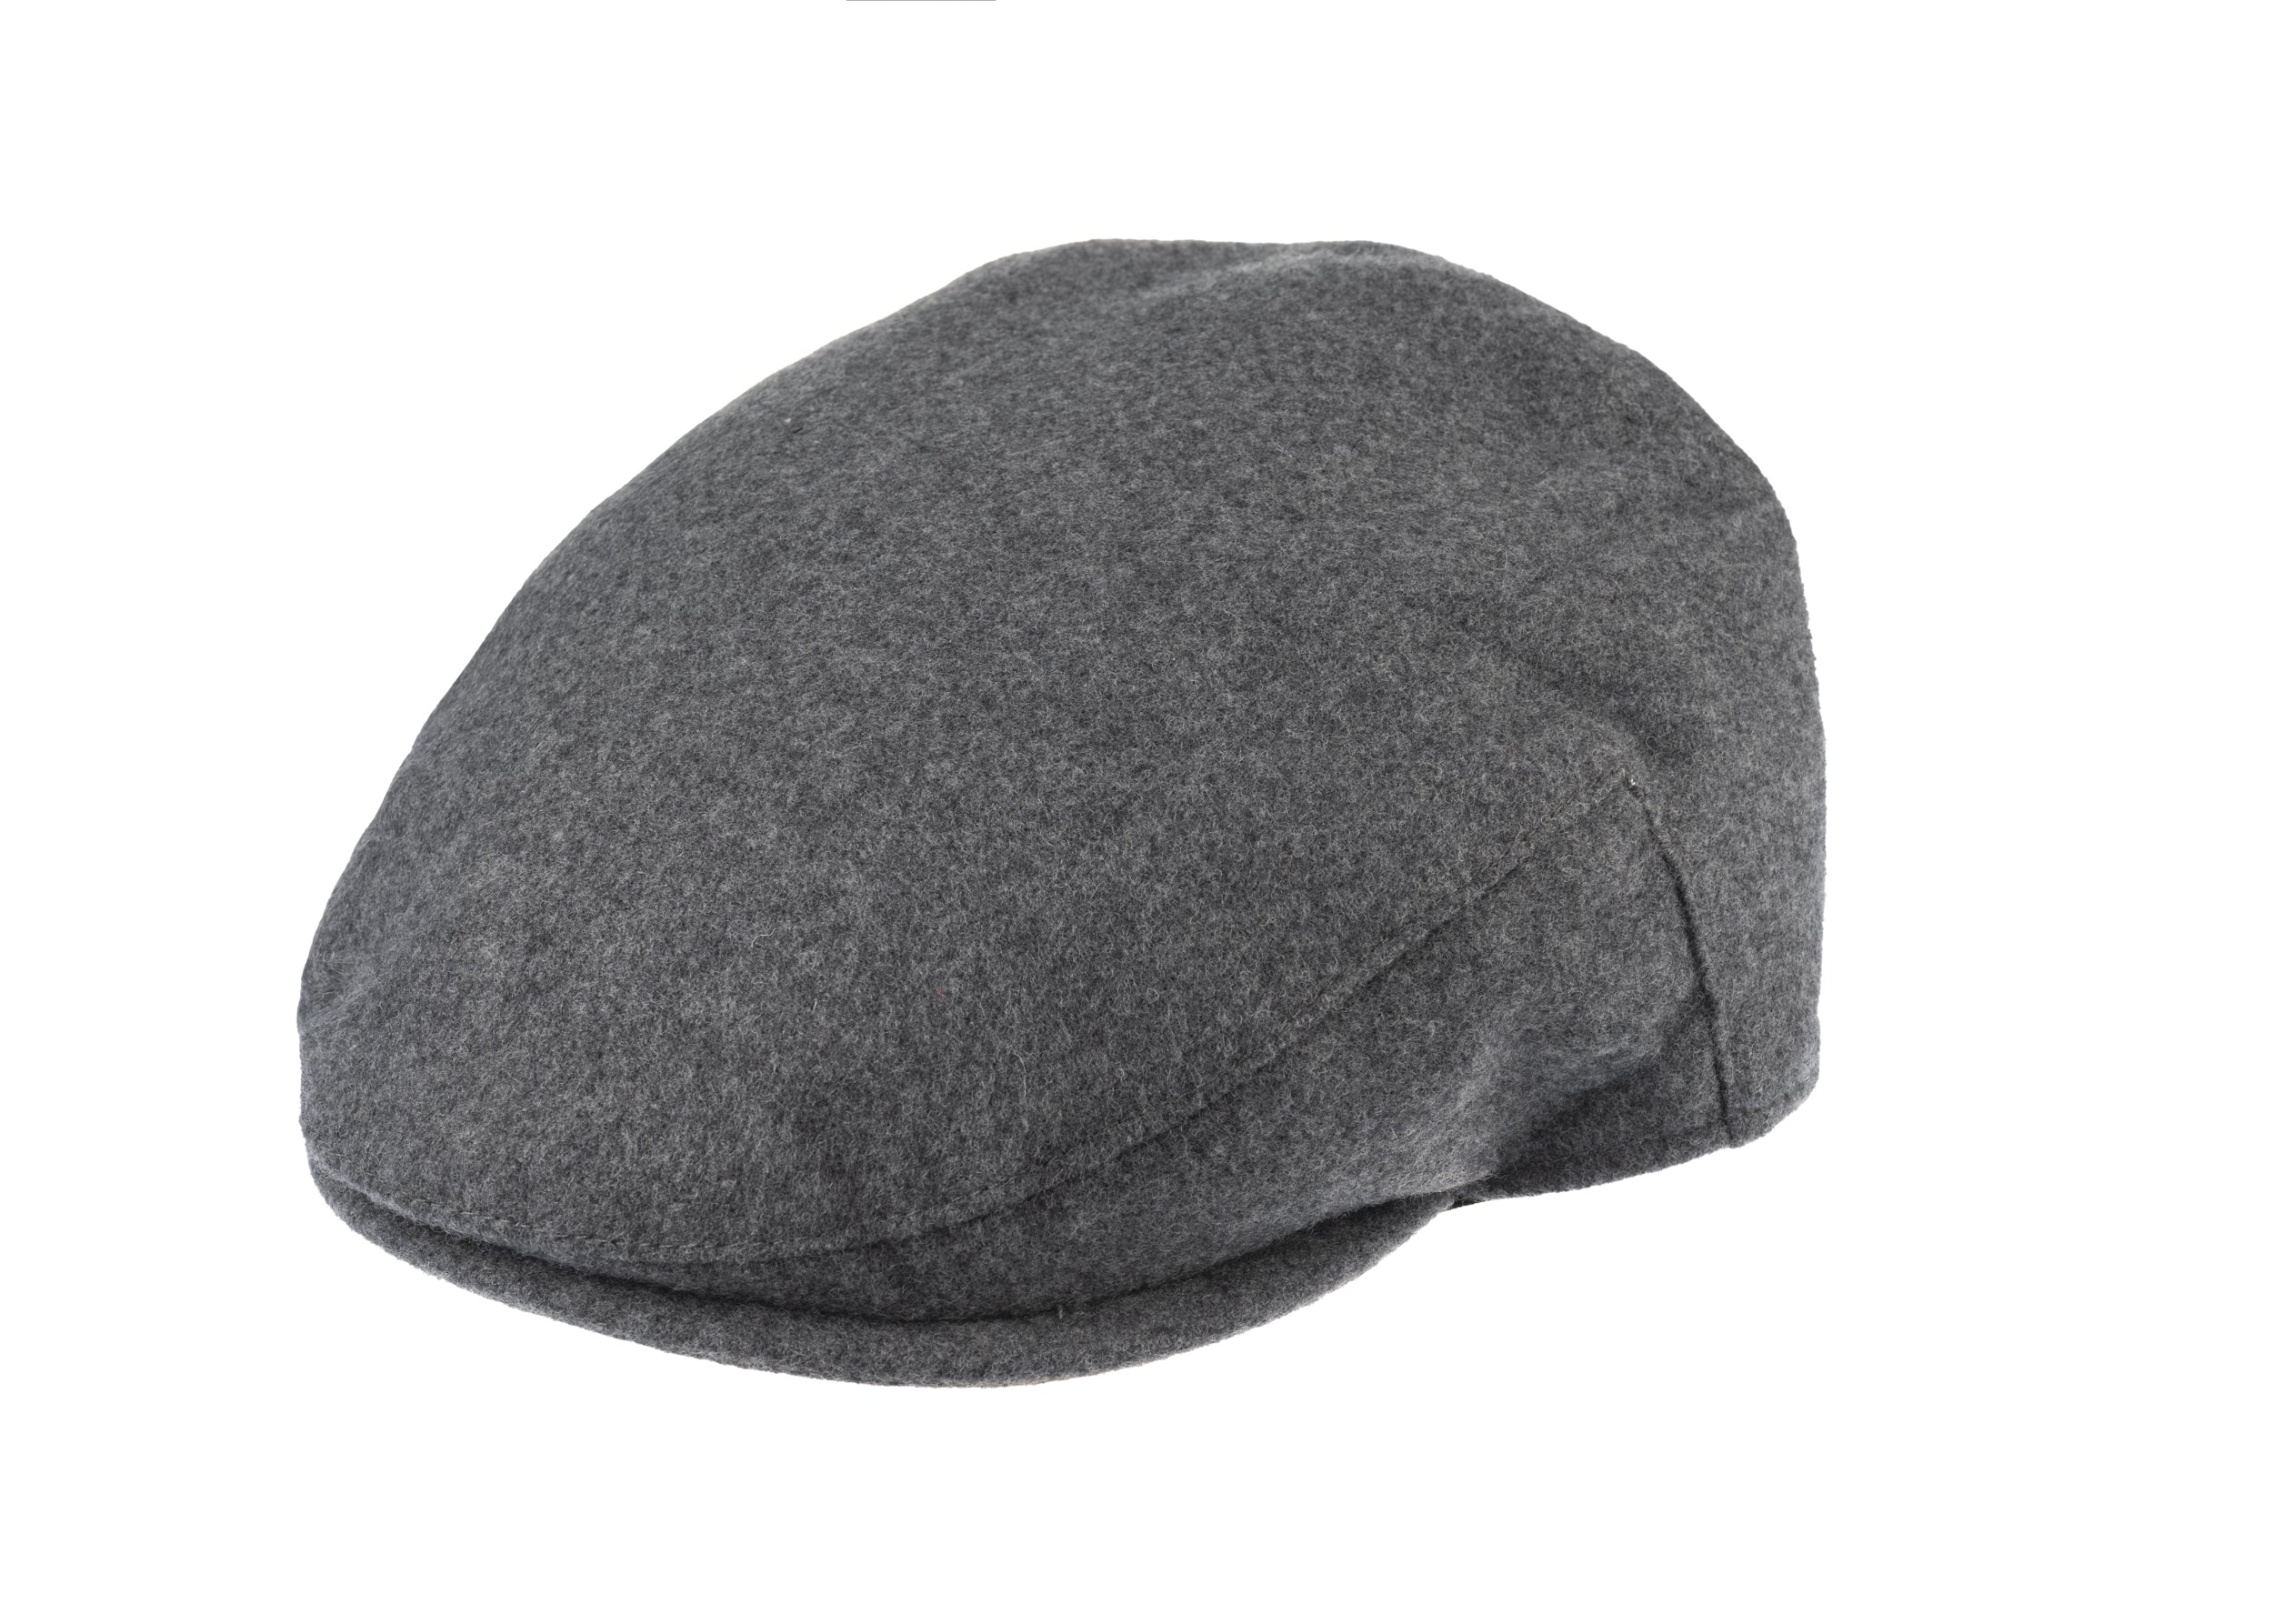 Josh balmoral flat cap in cashmere/wool blend fabric in Grey